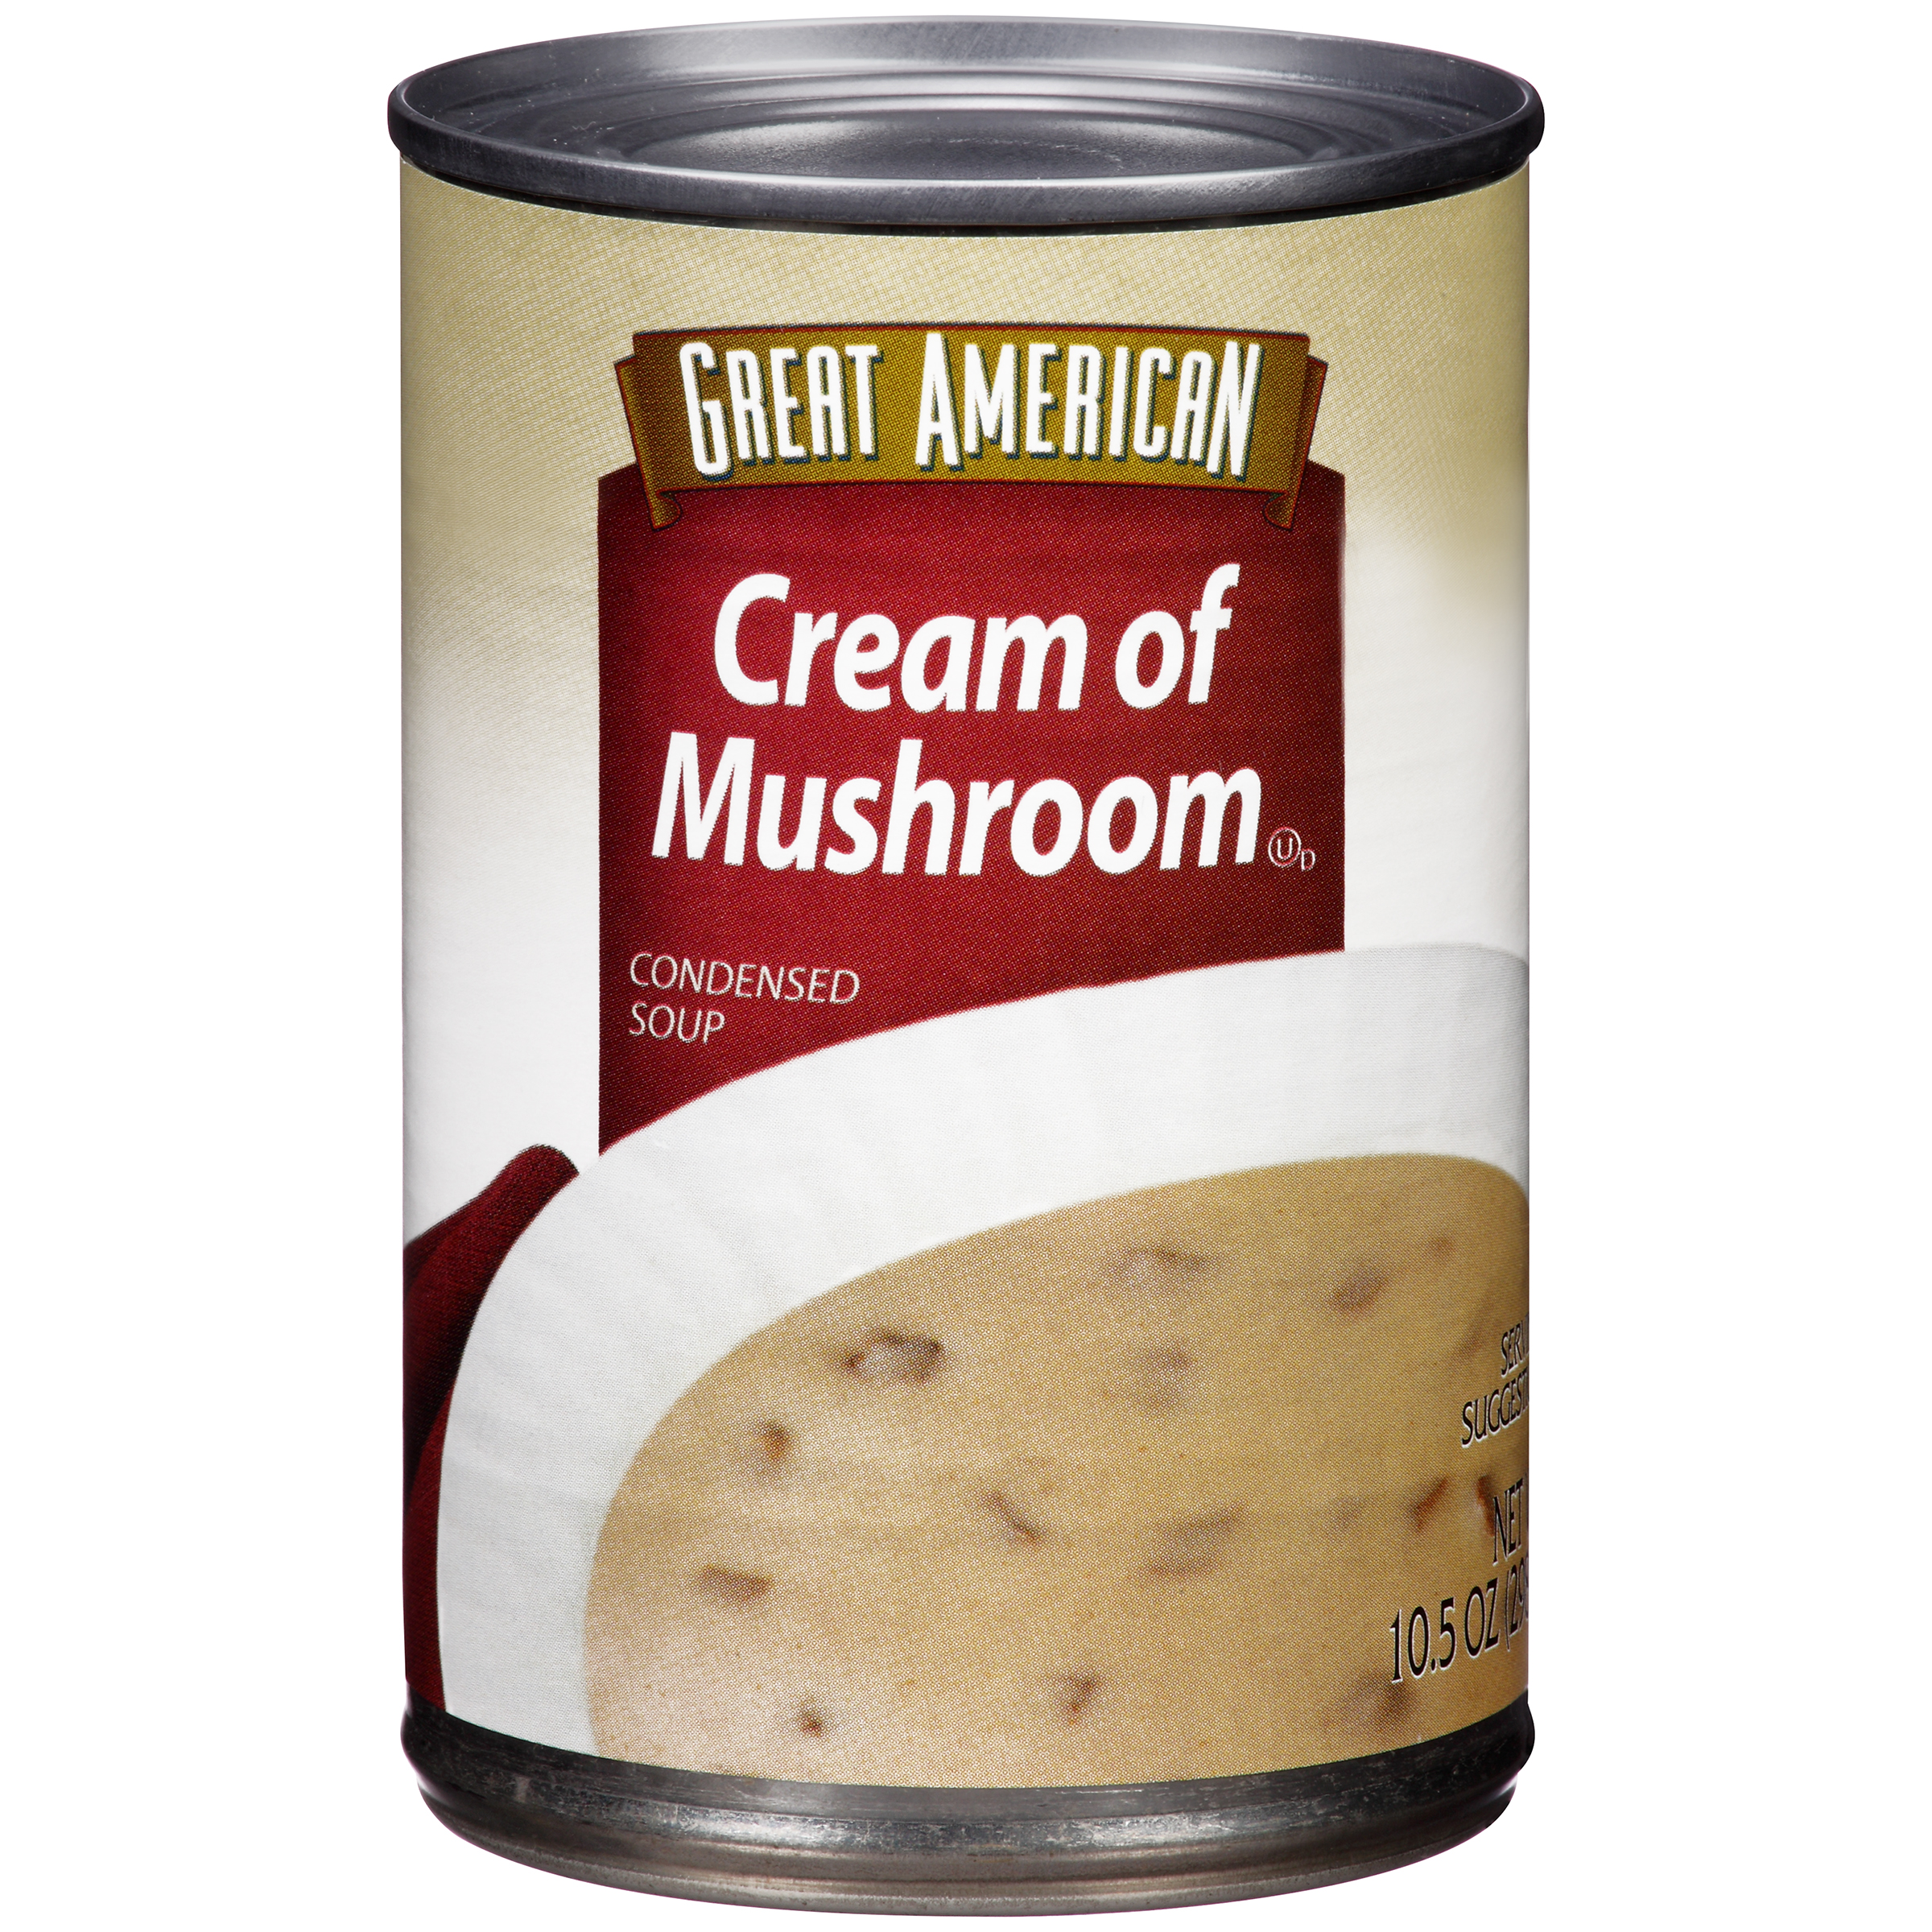 Cream of Mushroom Condensed Soup 10.5 oz Can